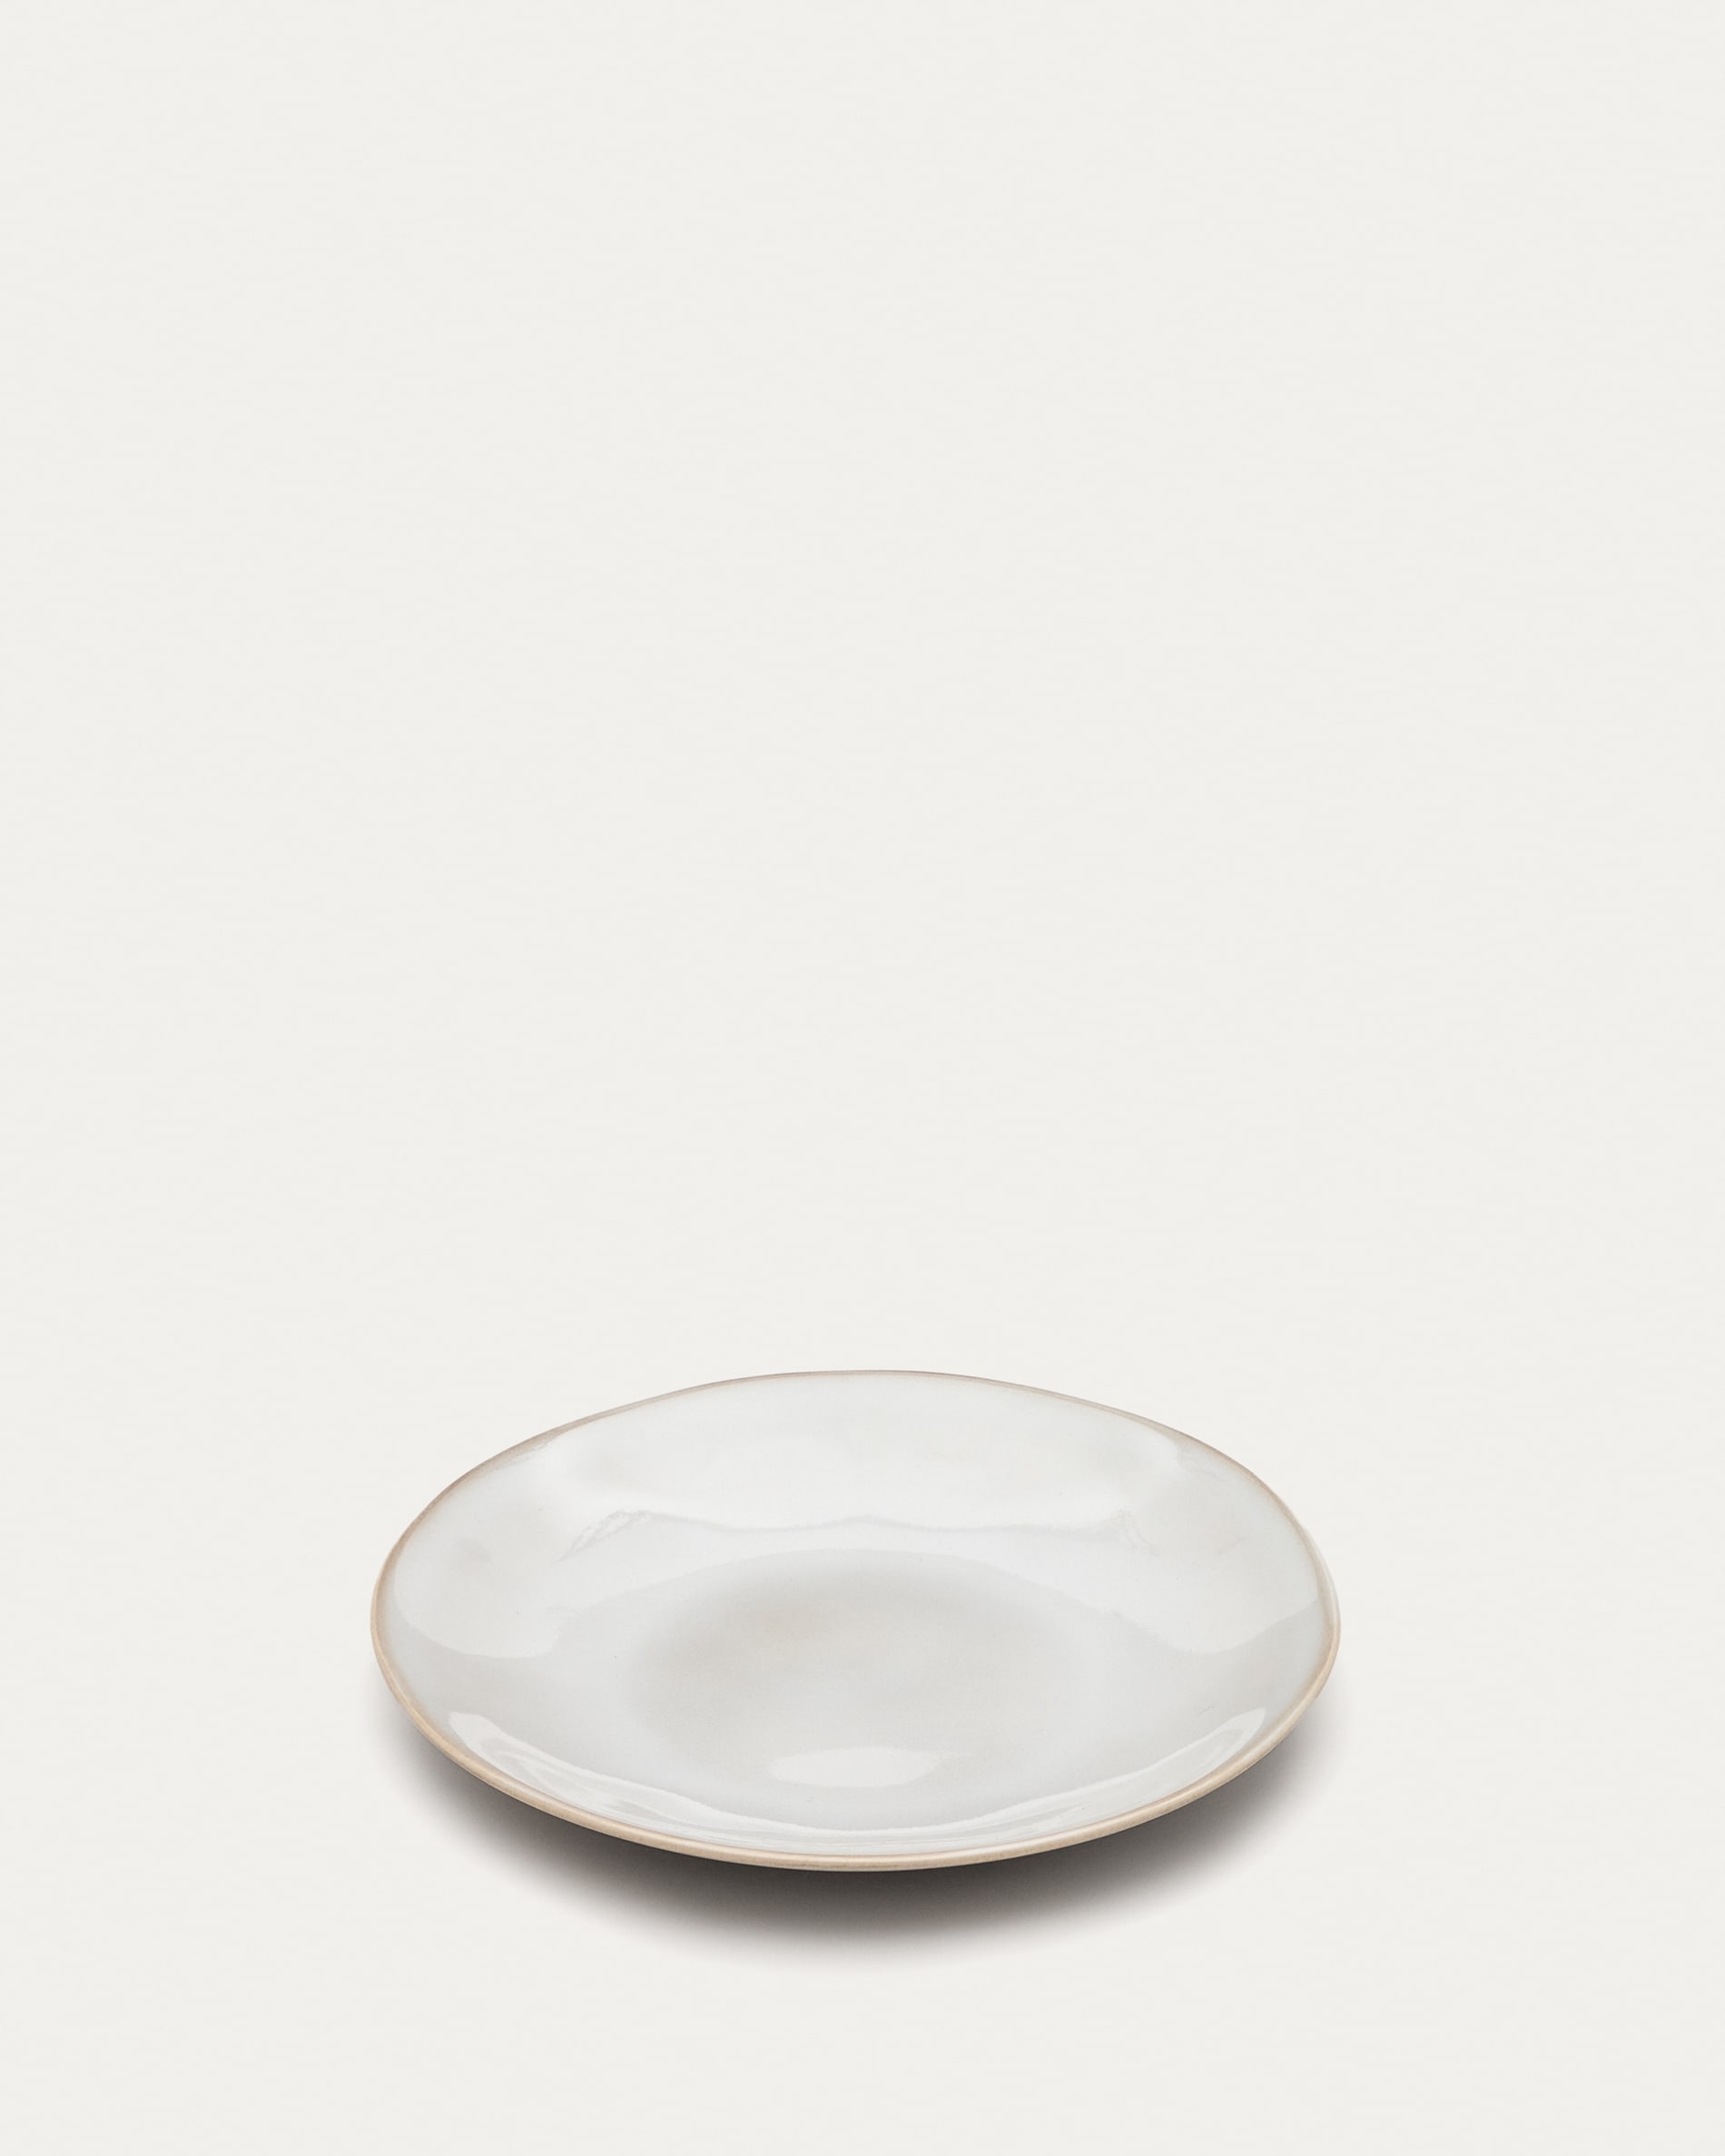 Portbou ceramic dessert plate in white | Kave Home